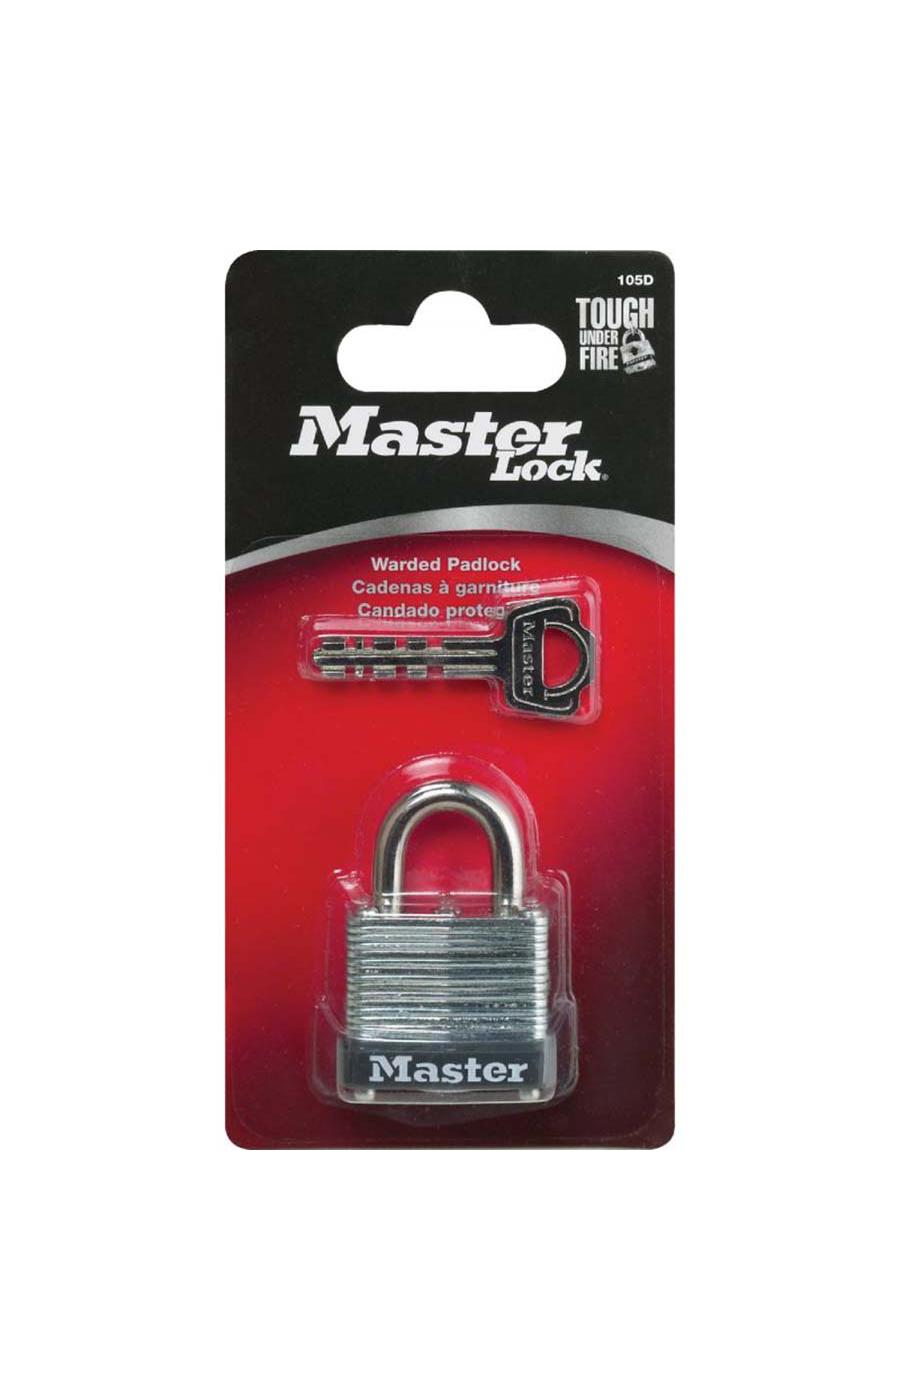 Master Lock 105D Laminated Padlock; image 1 of 2